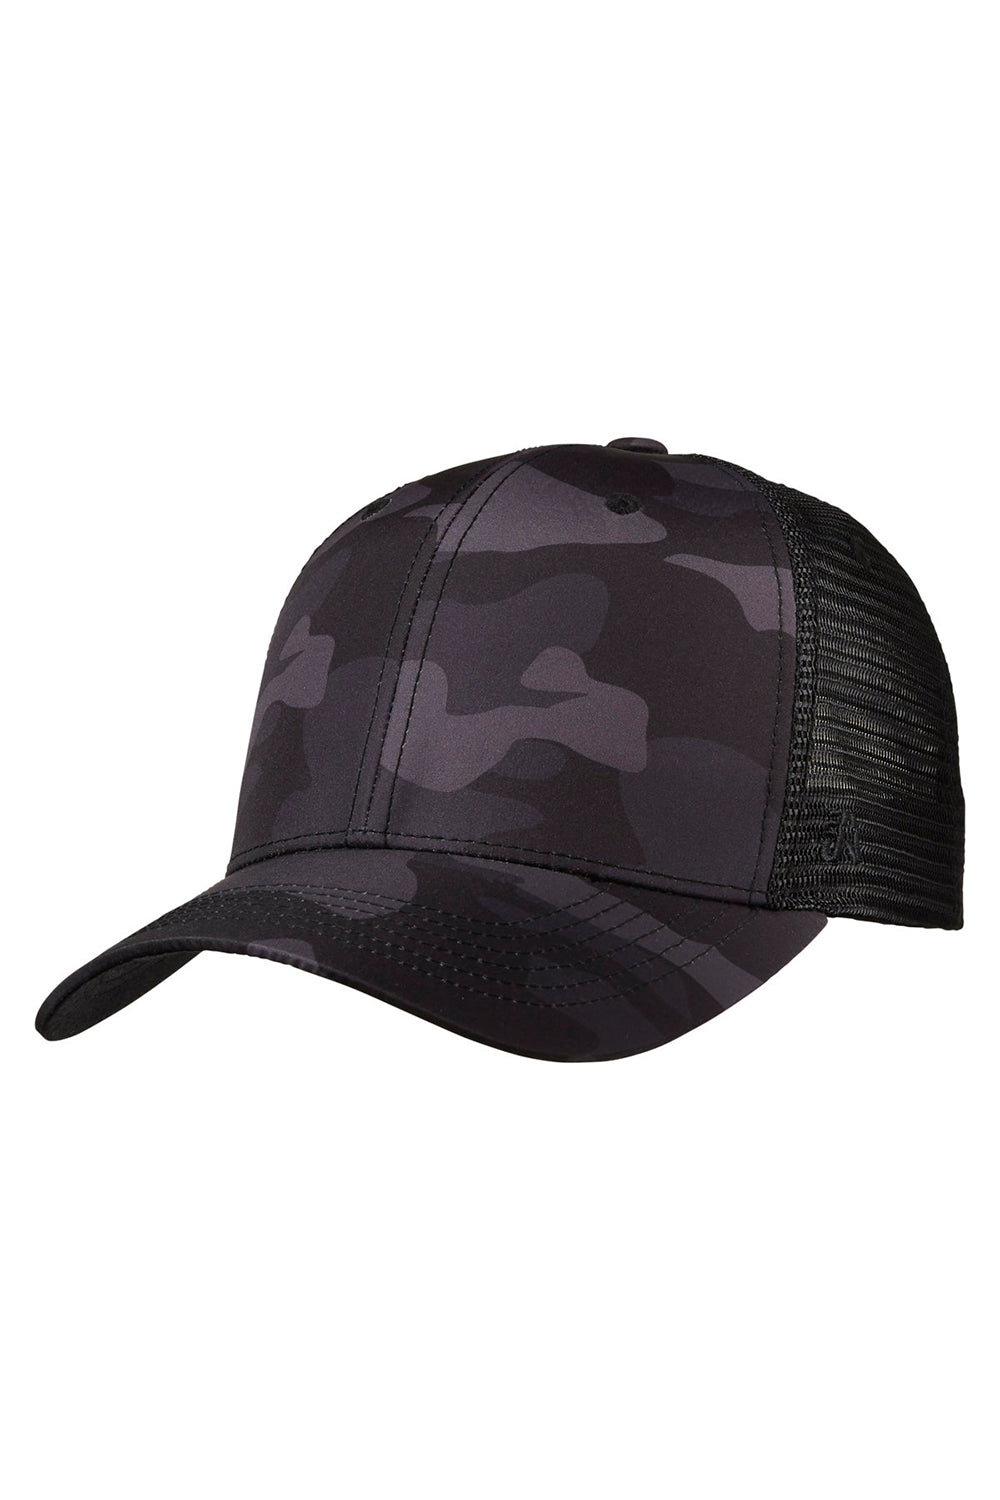 J America TW5505 Mens Ranger Hat Black Camo/Black Front